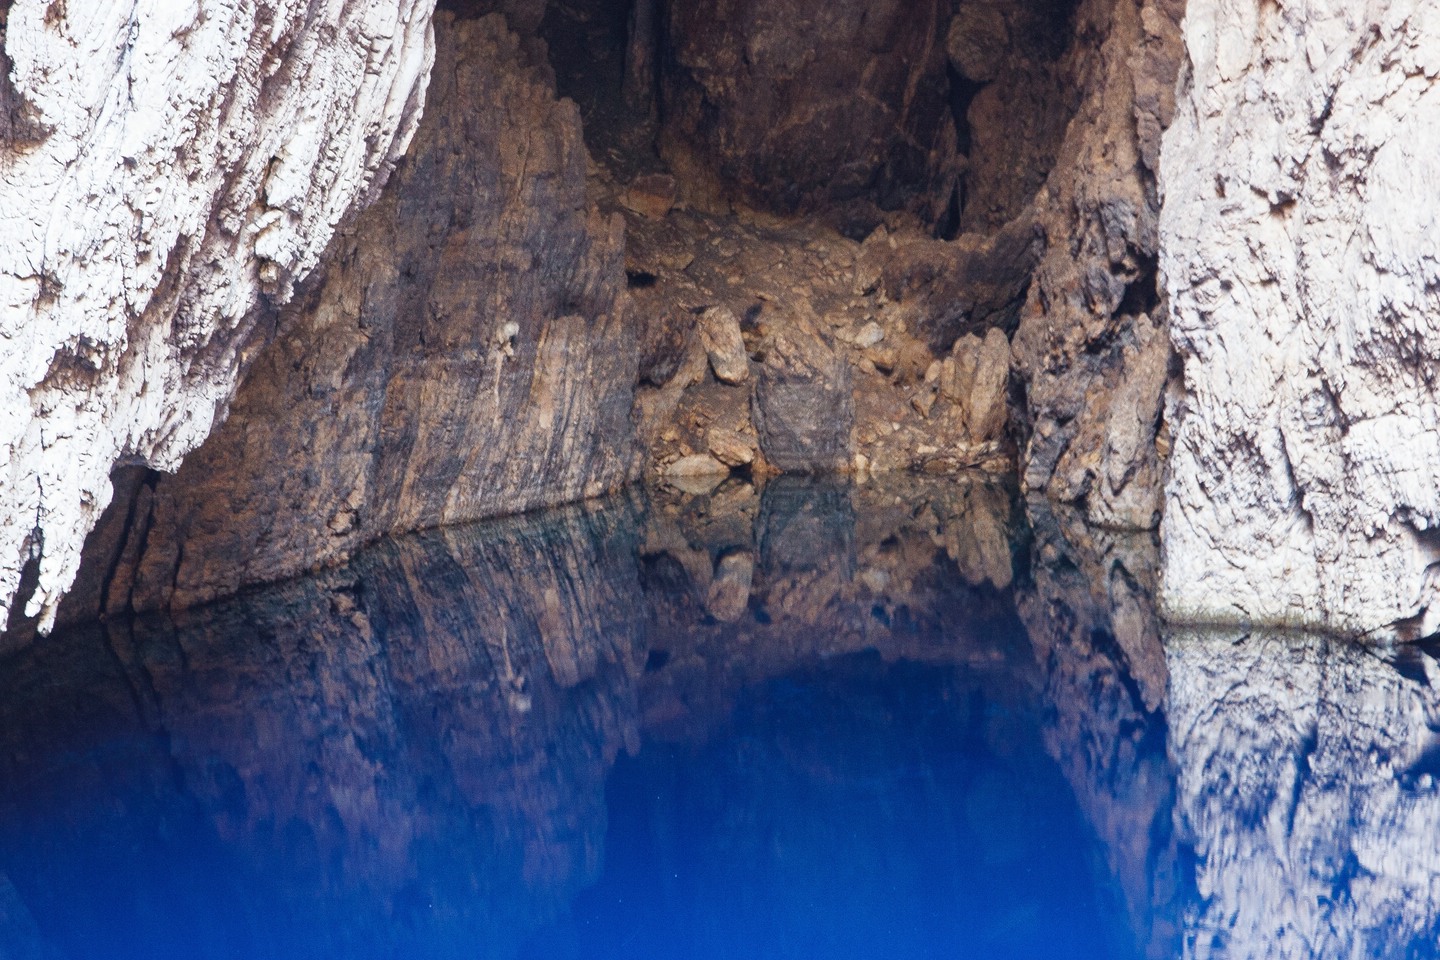 Chinhoyi Caves